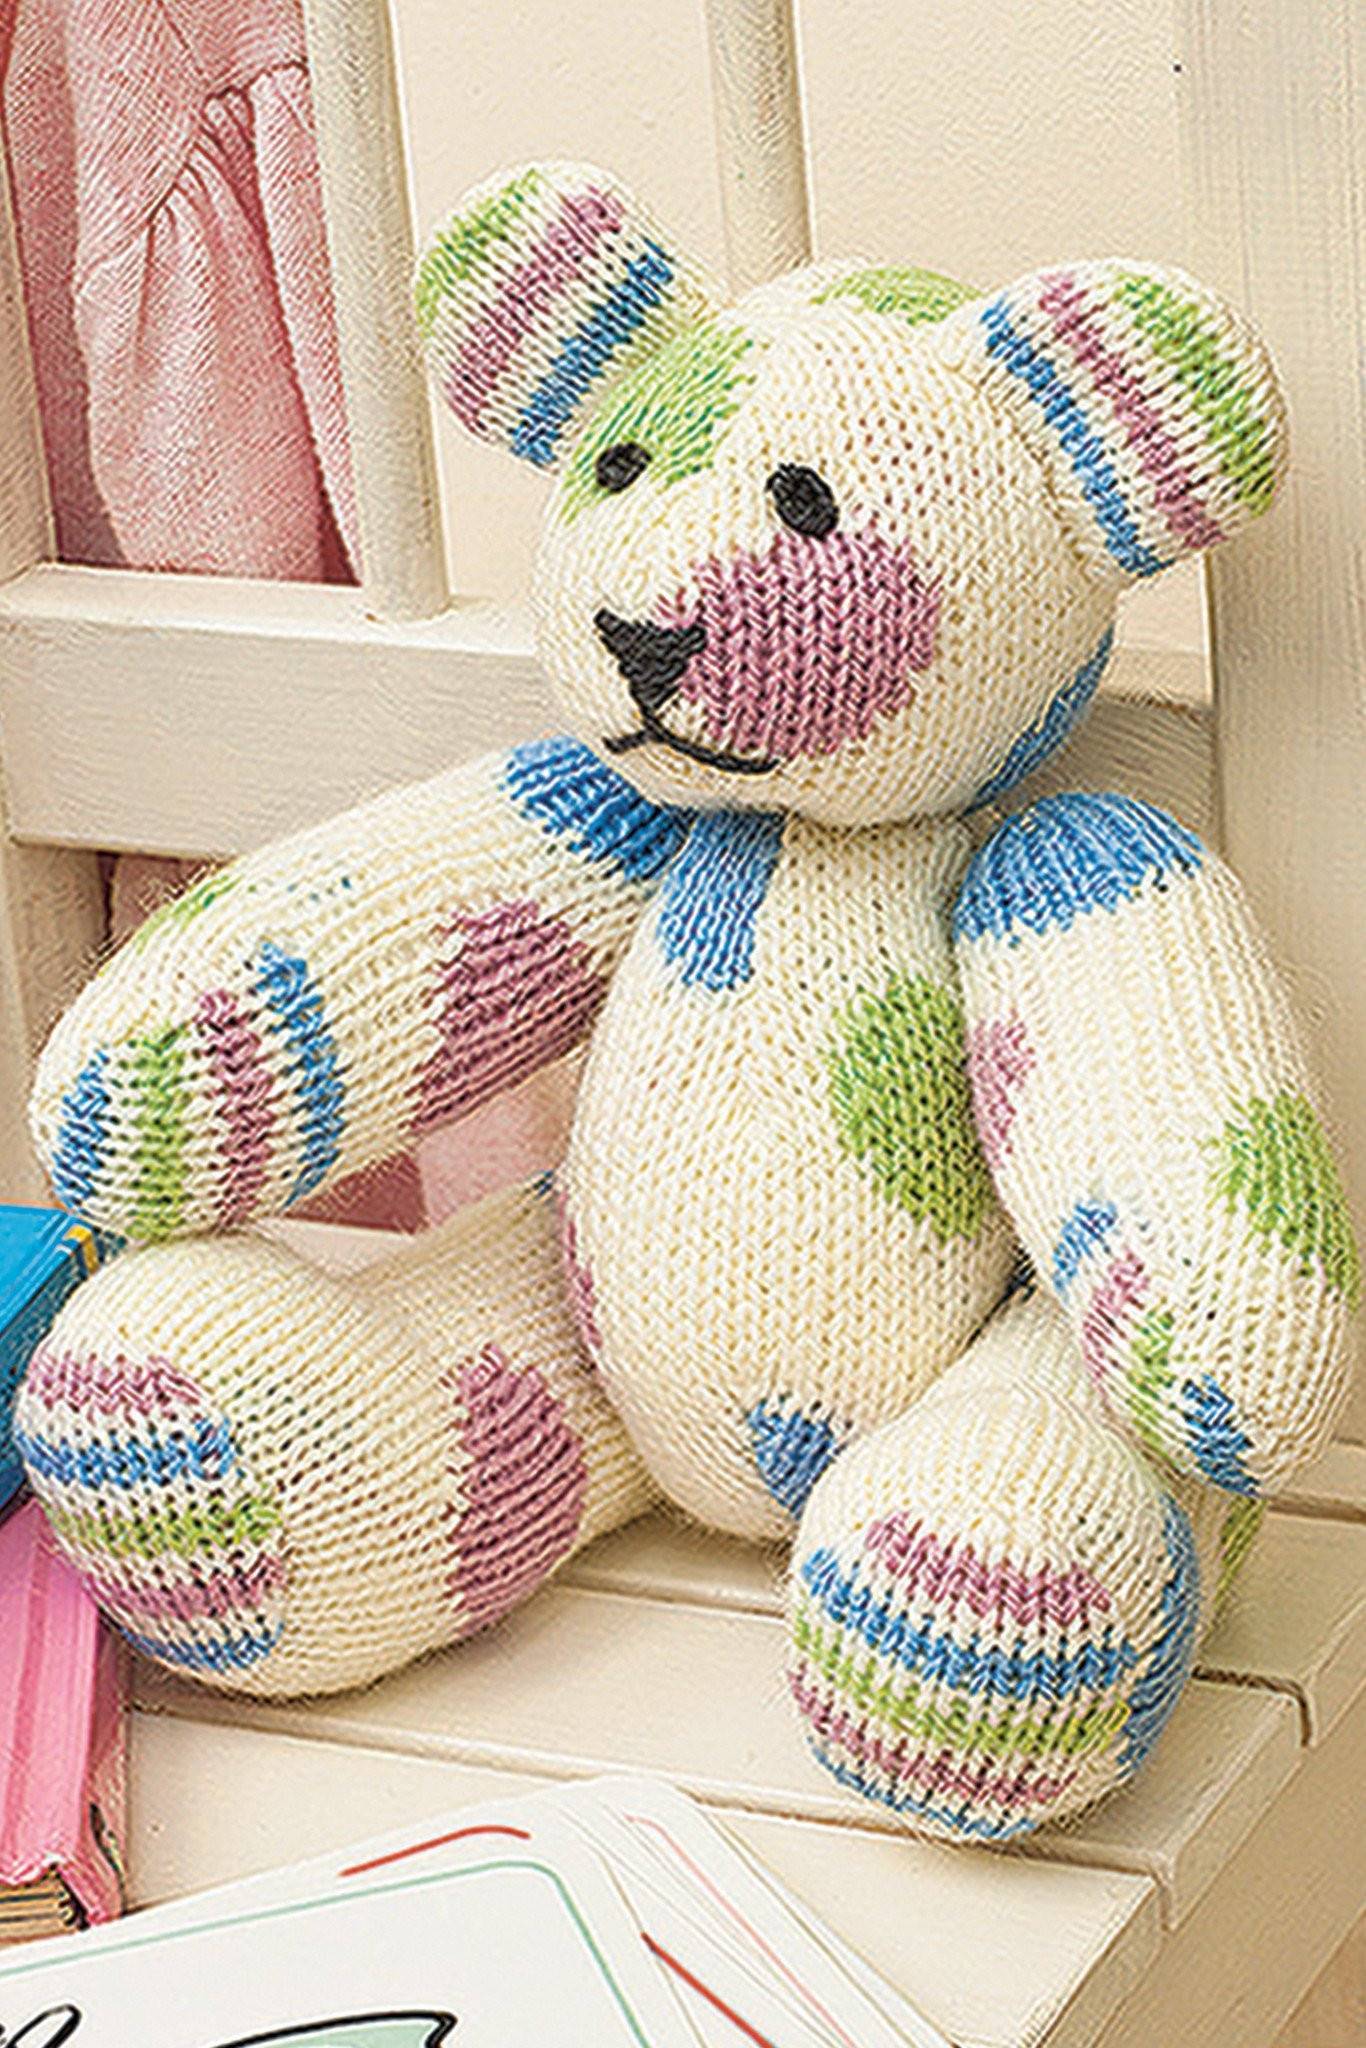 Patterned Teddy Bear Make Knitting Pattern The Knitting Network